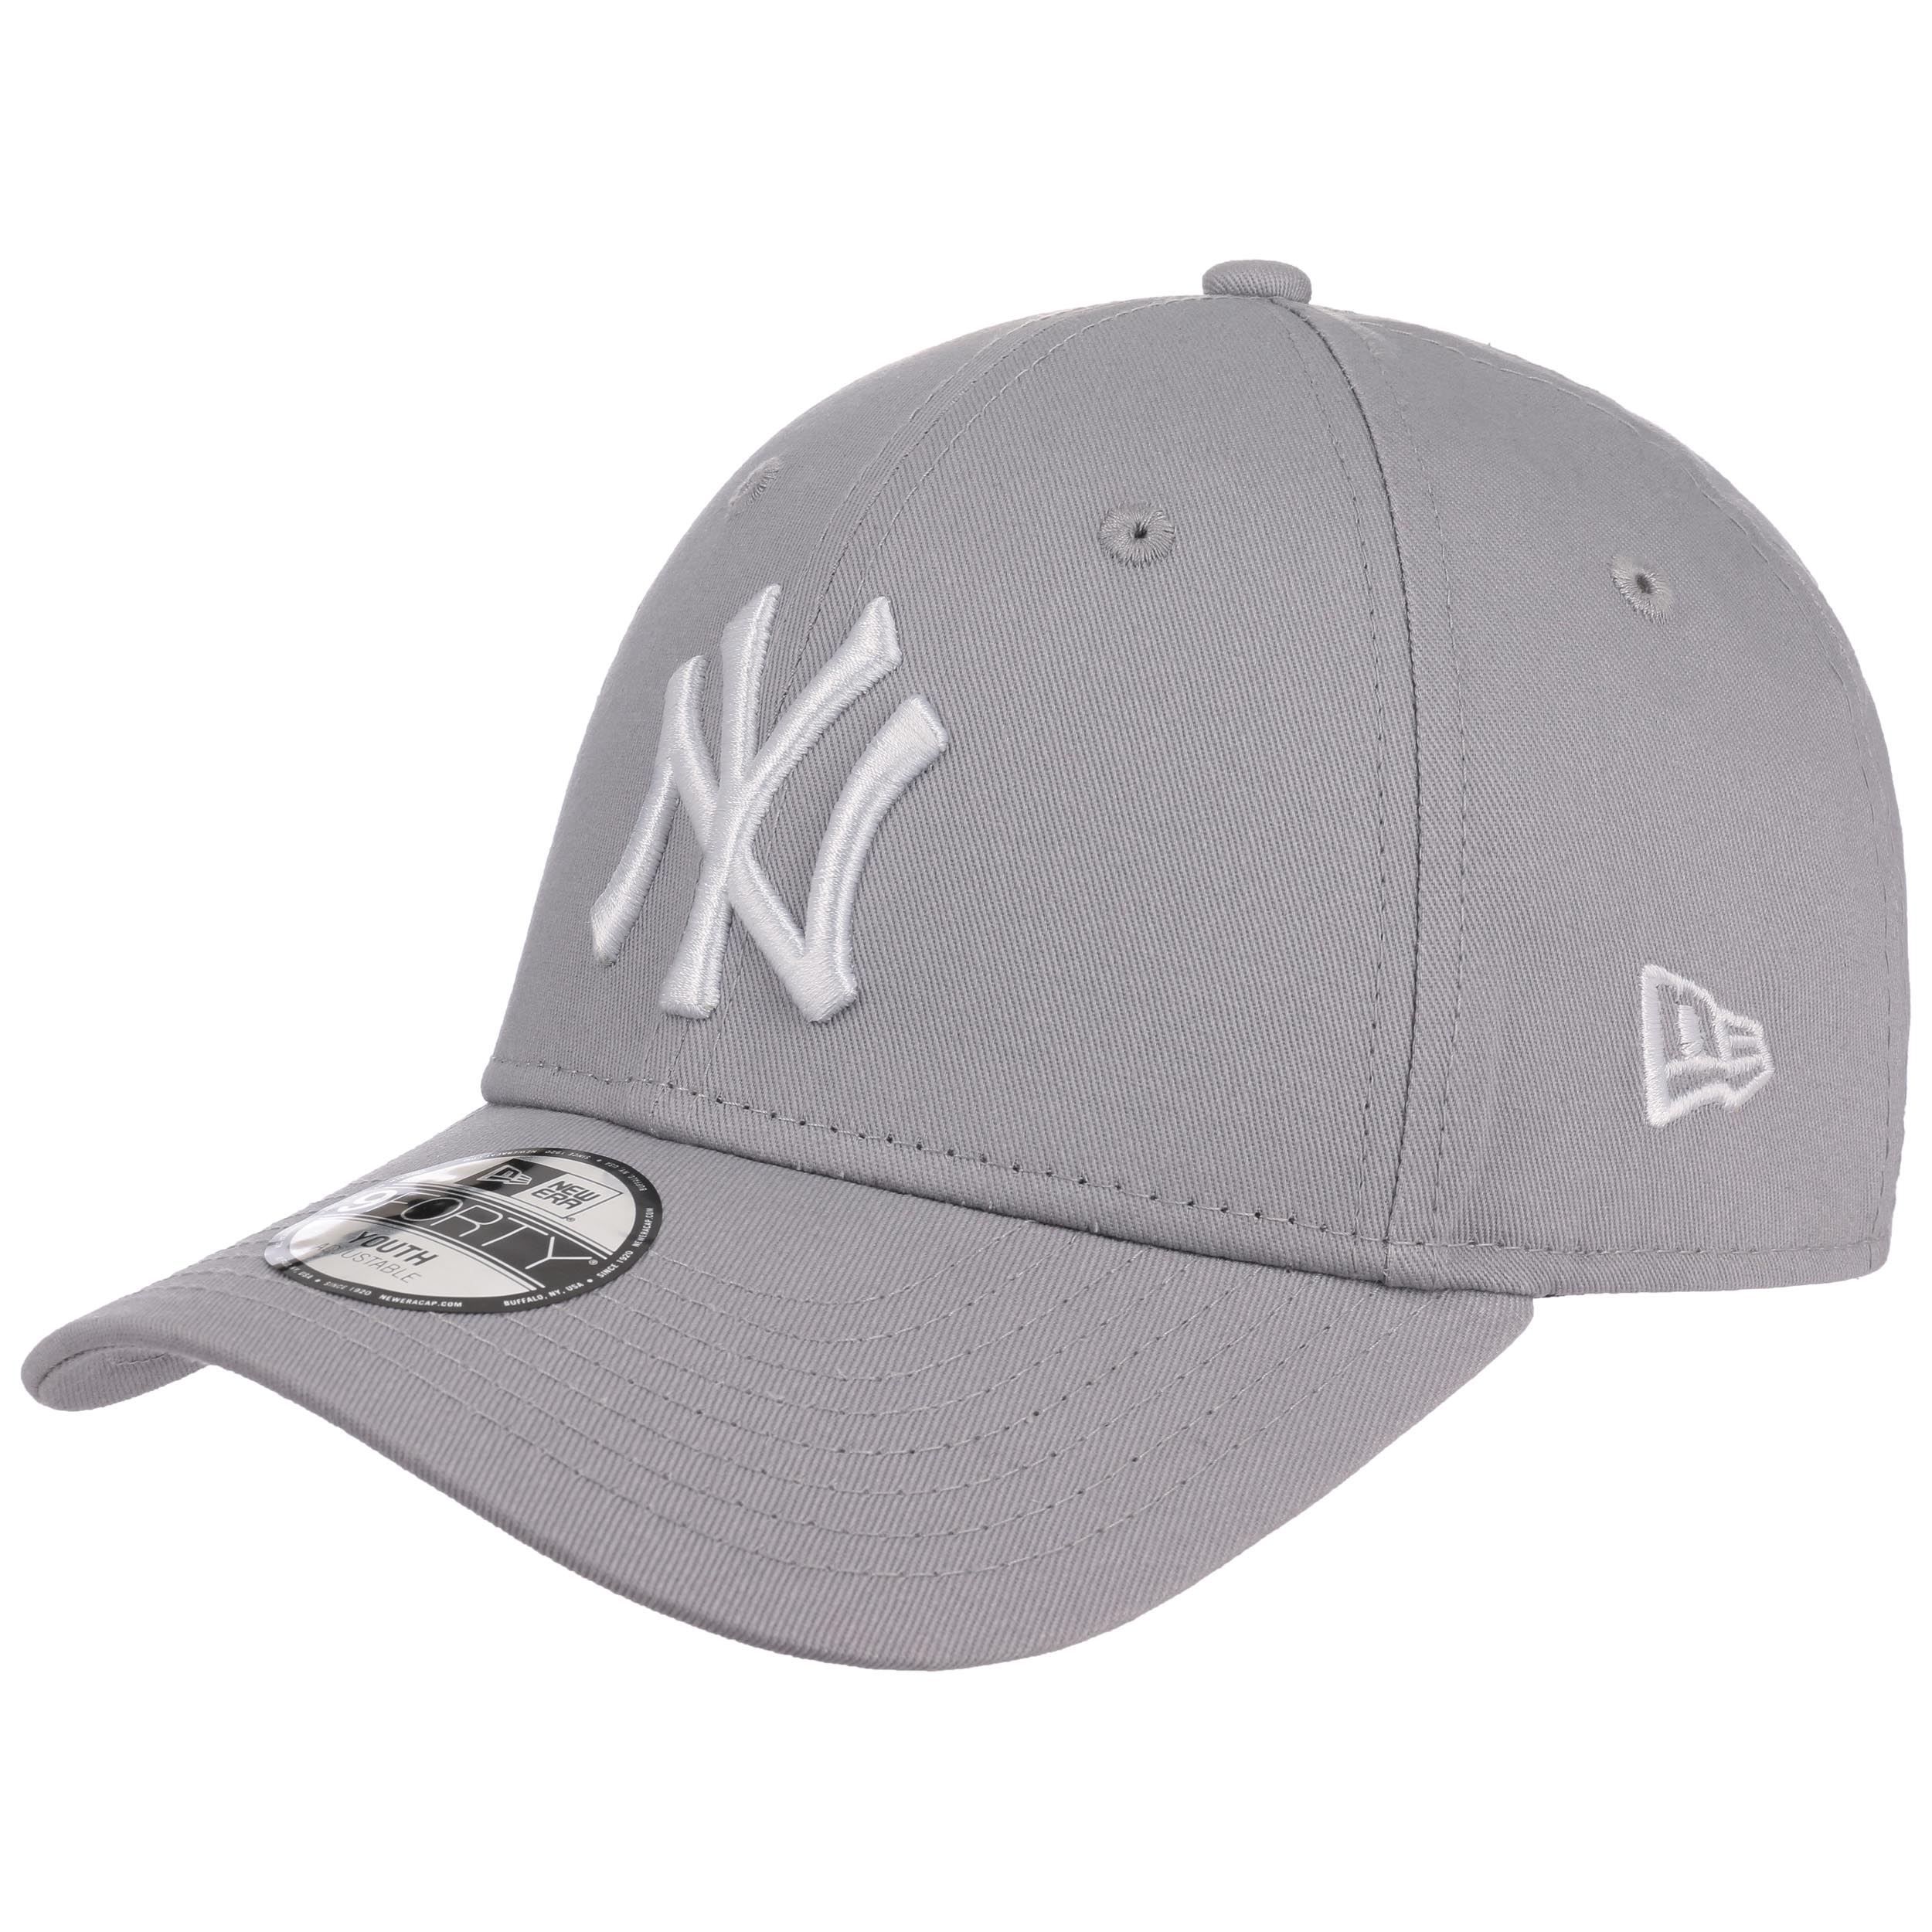 Ringlet globaal Vervoer New era pet - NY Yankees 9forty MLB League BA youth - grijs - Lucadeau